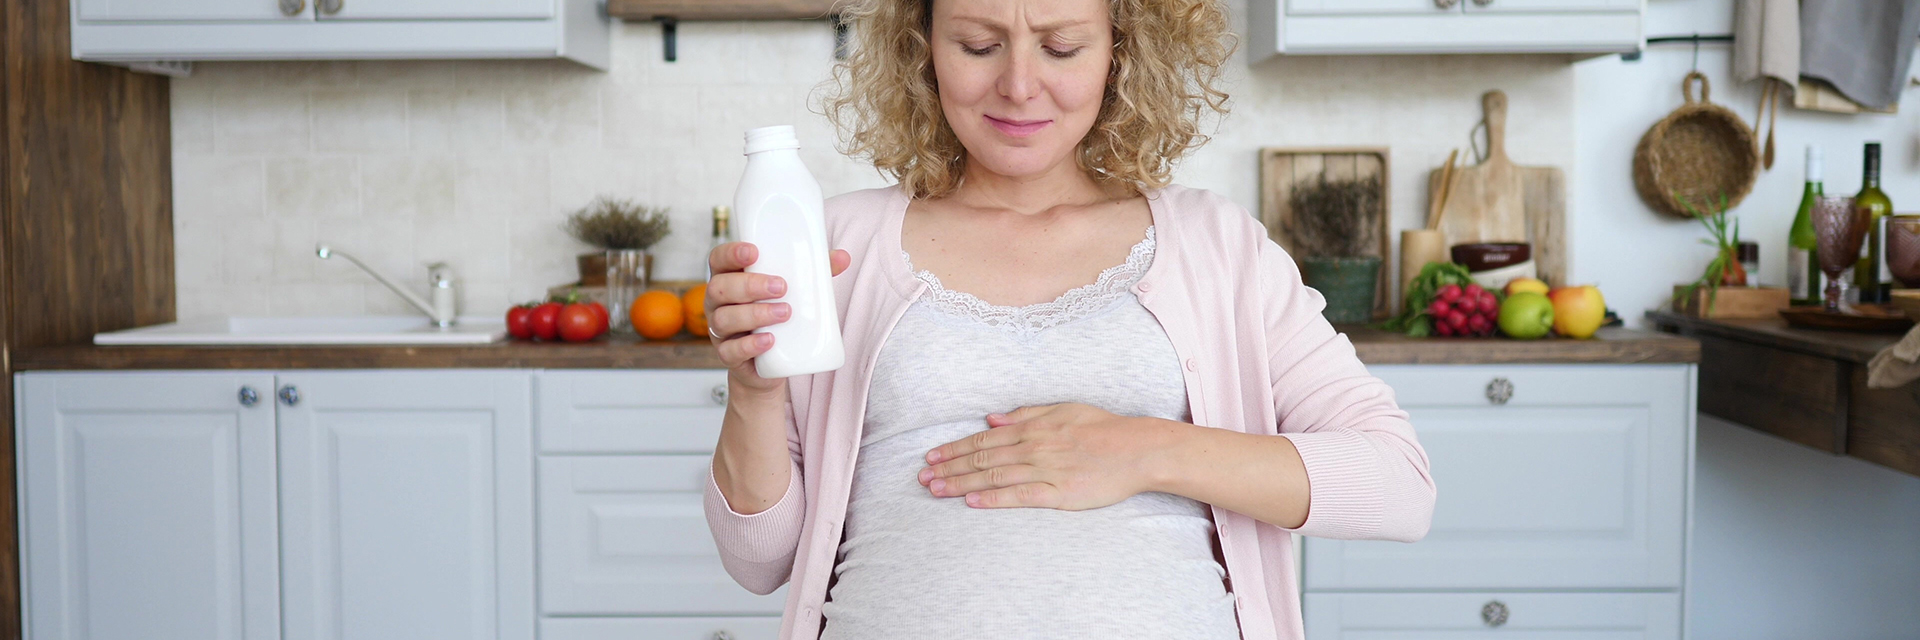 Pregnant woman grimacing holding bottle